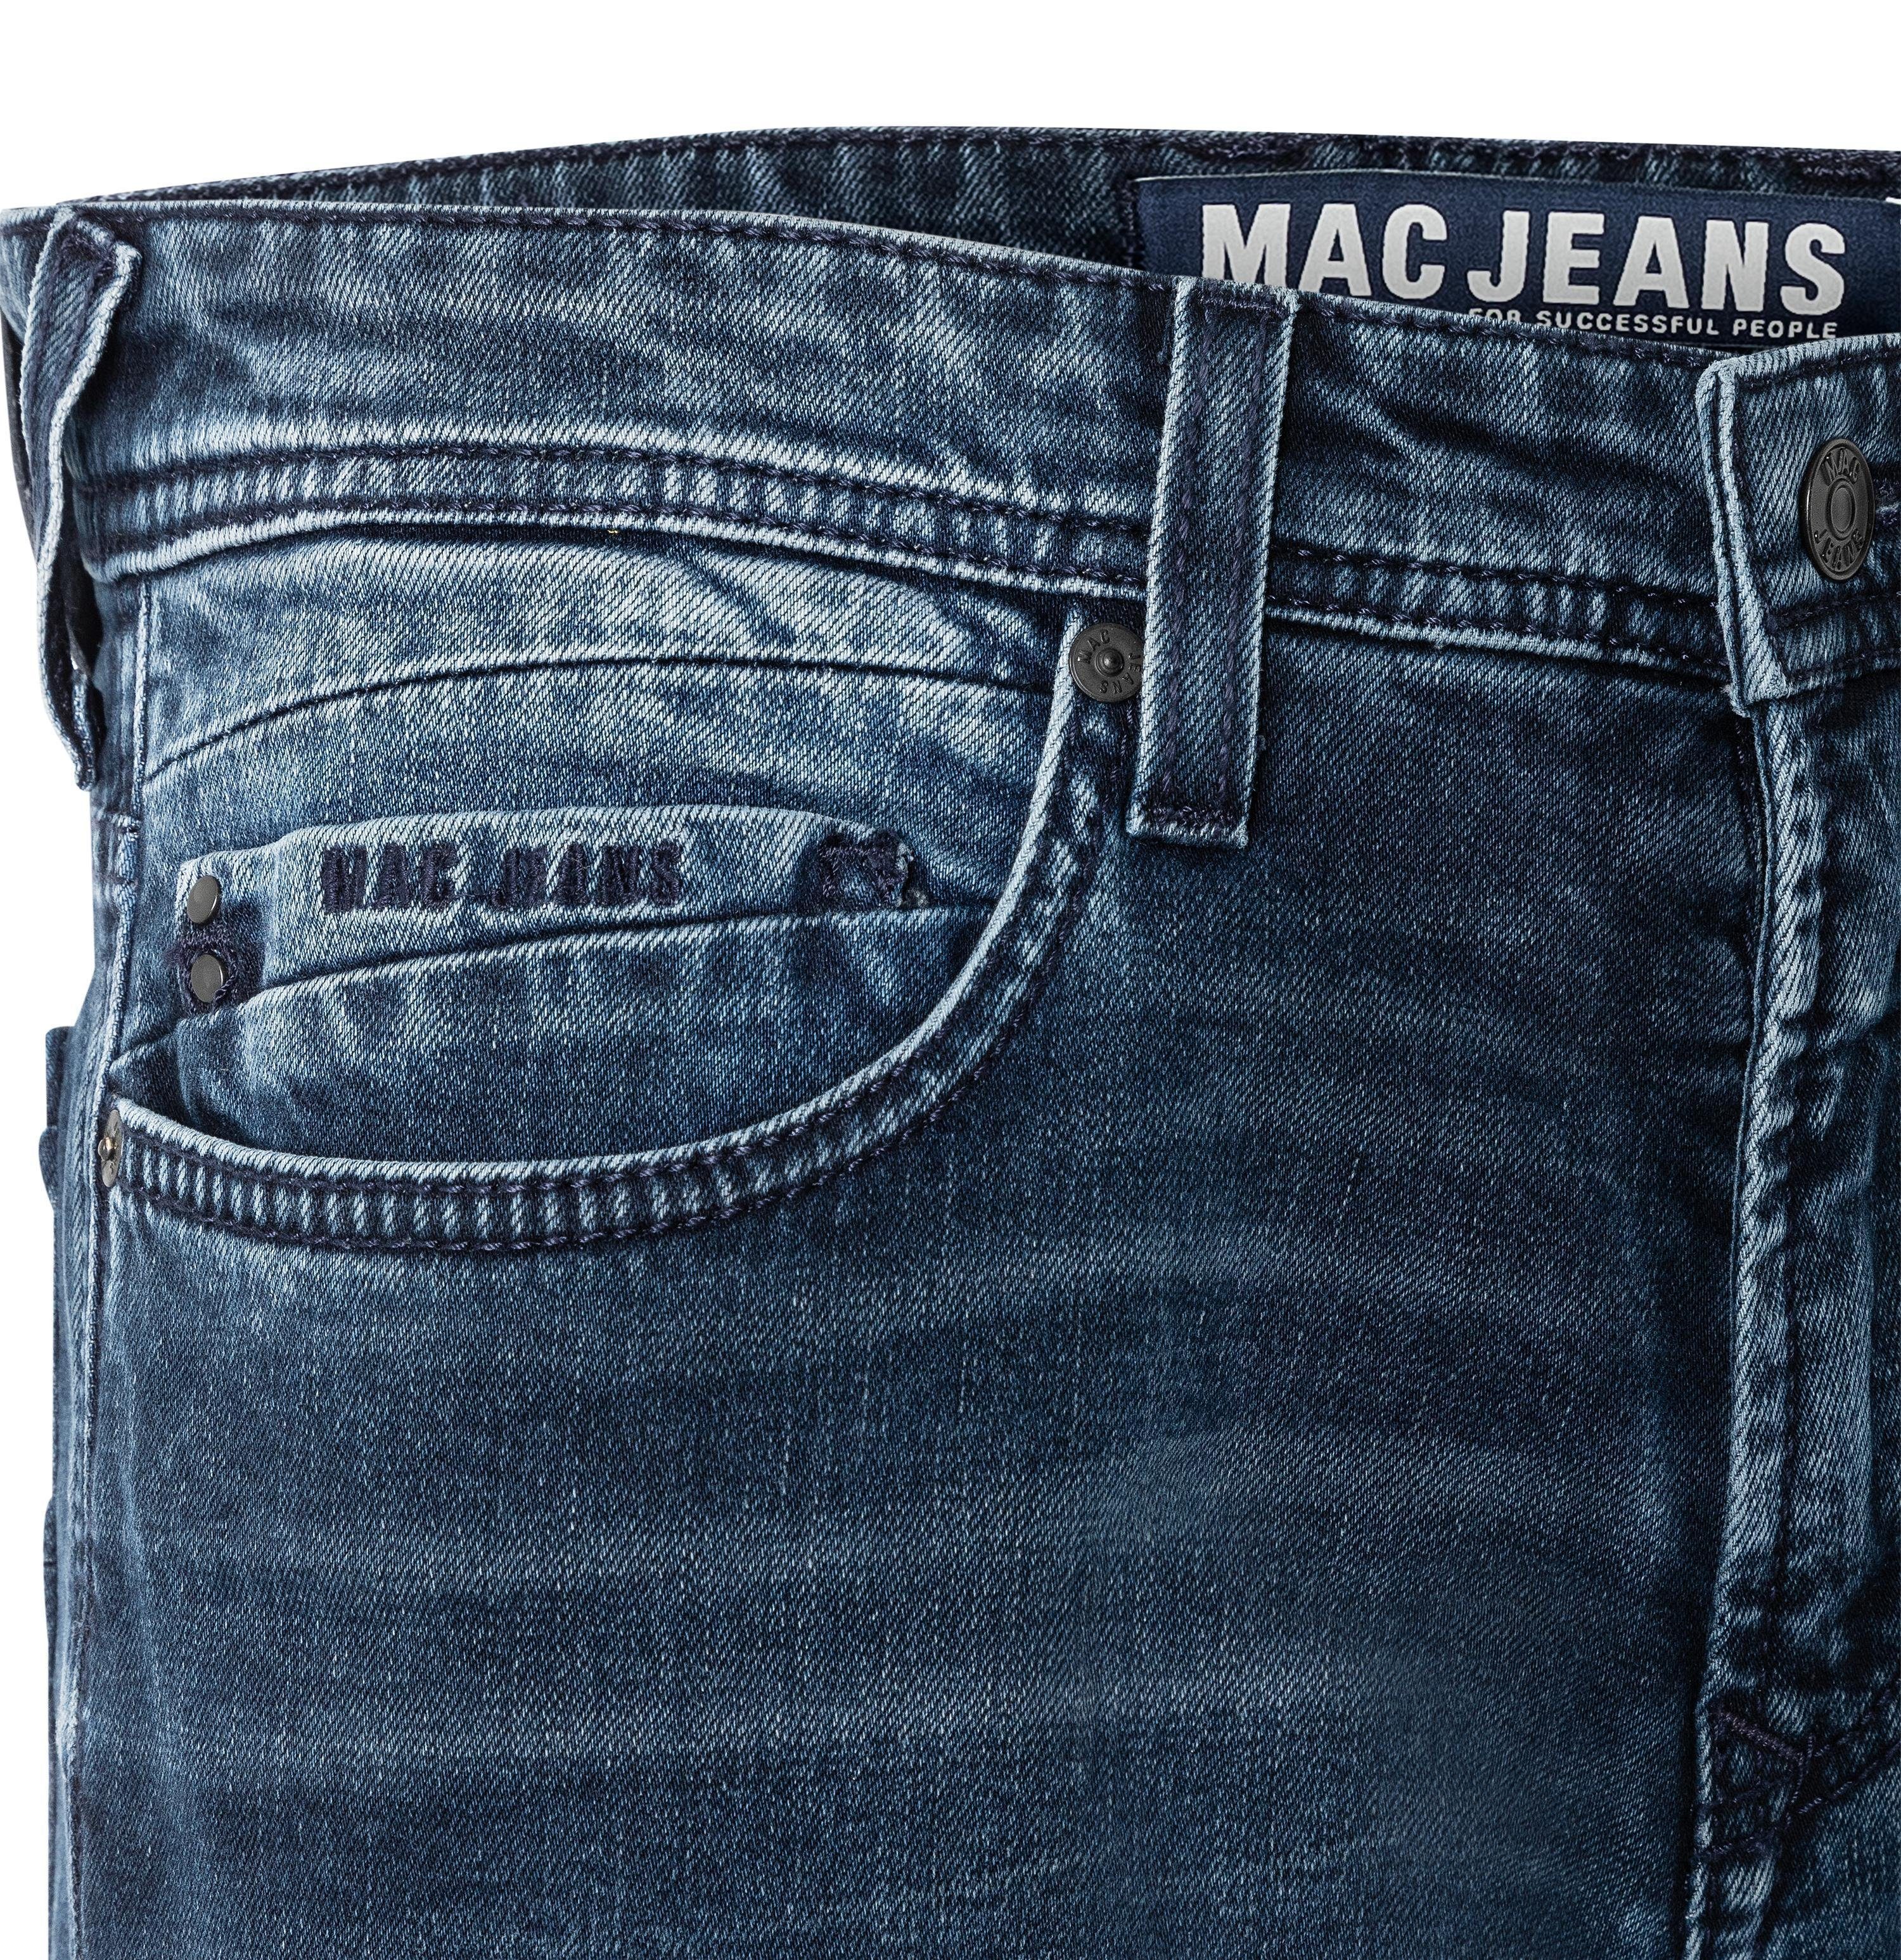 MAC 5-Pocket-Jeans MAC BEN blue used 0384-00-0982L black authentic blue black authentic H997 used H997